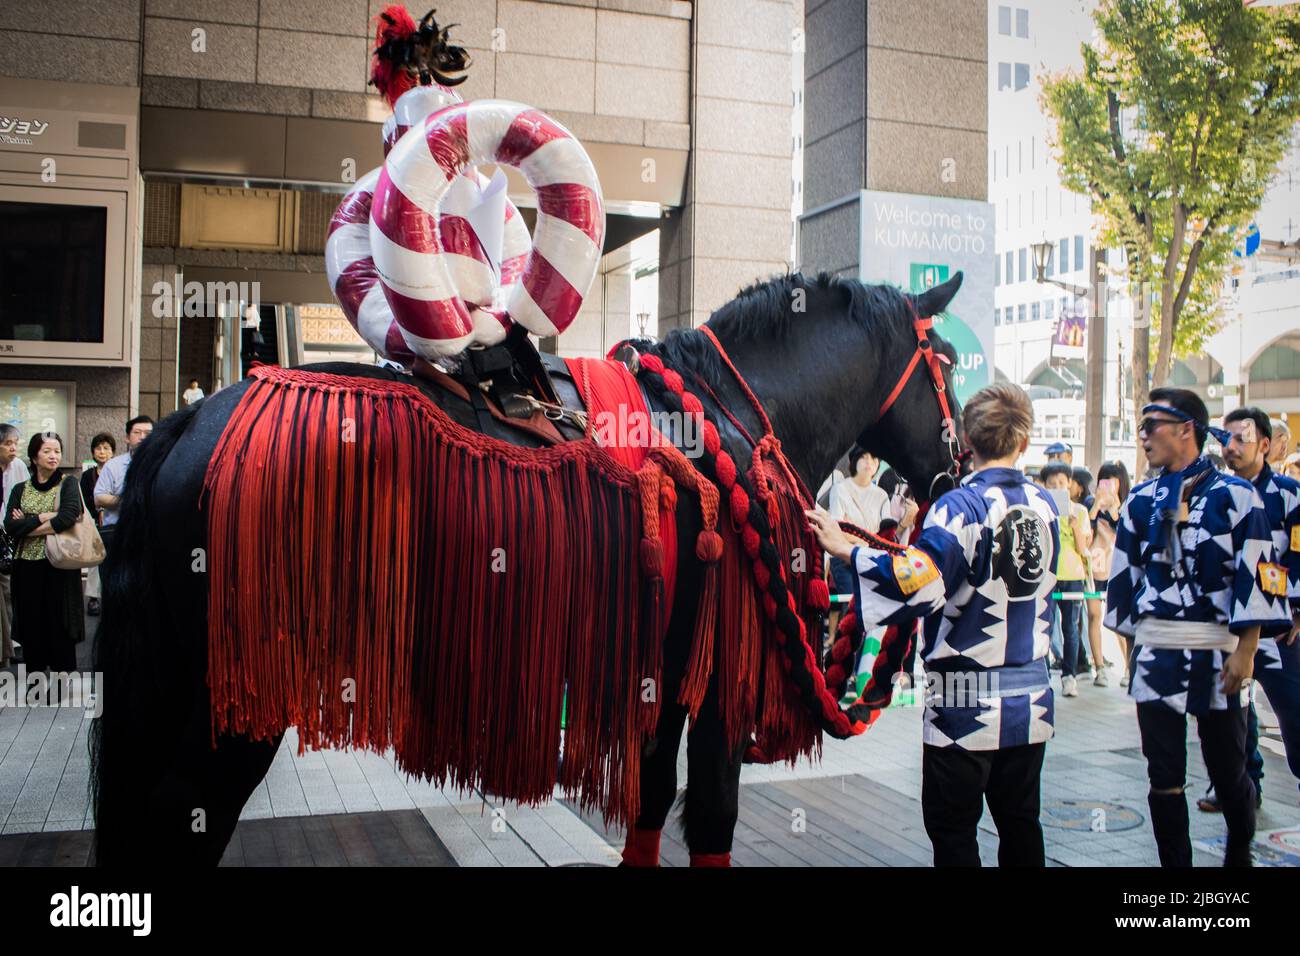 Kumamoto, Japan - Sep. 16, 2019: Decorated horse at Fujisaki Hachimangu Autumn Festival with parade followers in traditional Kimono uniform Stock Photo